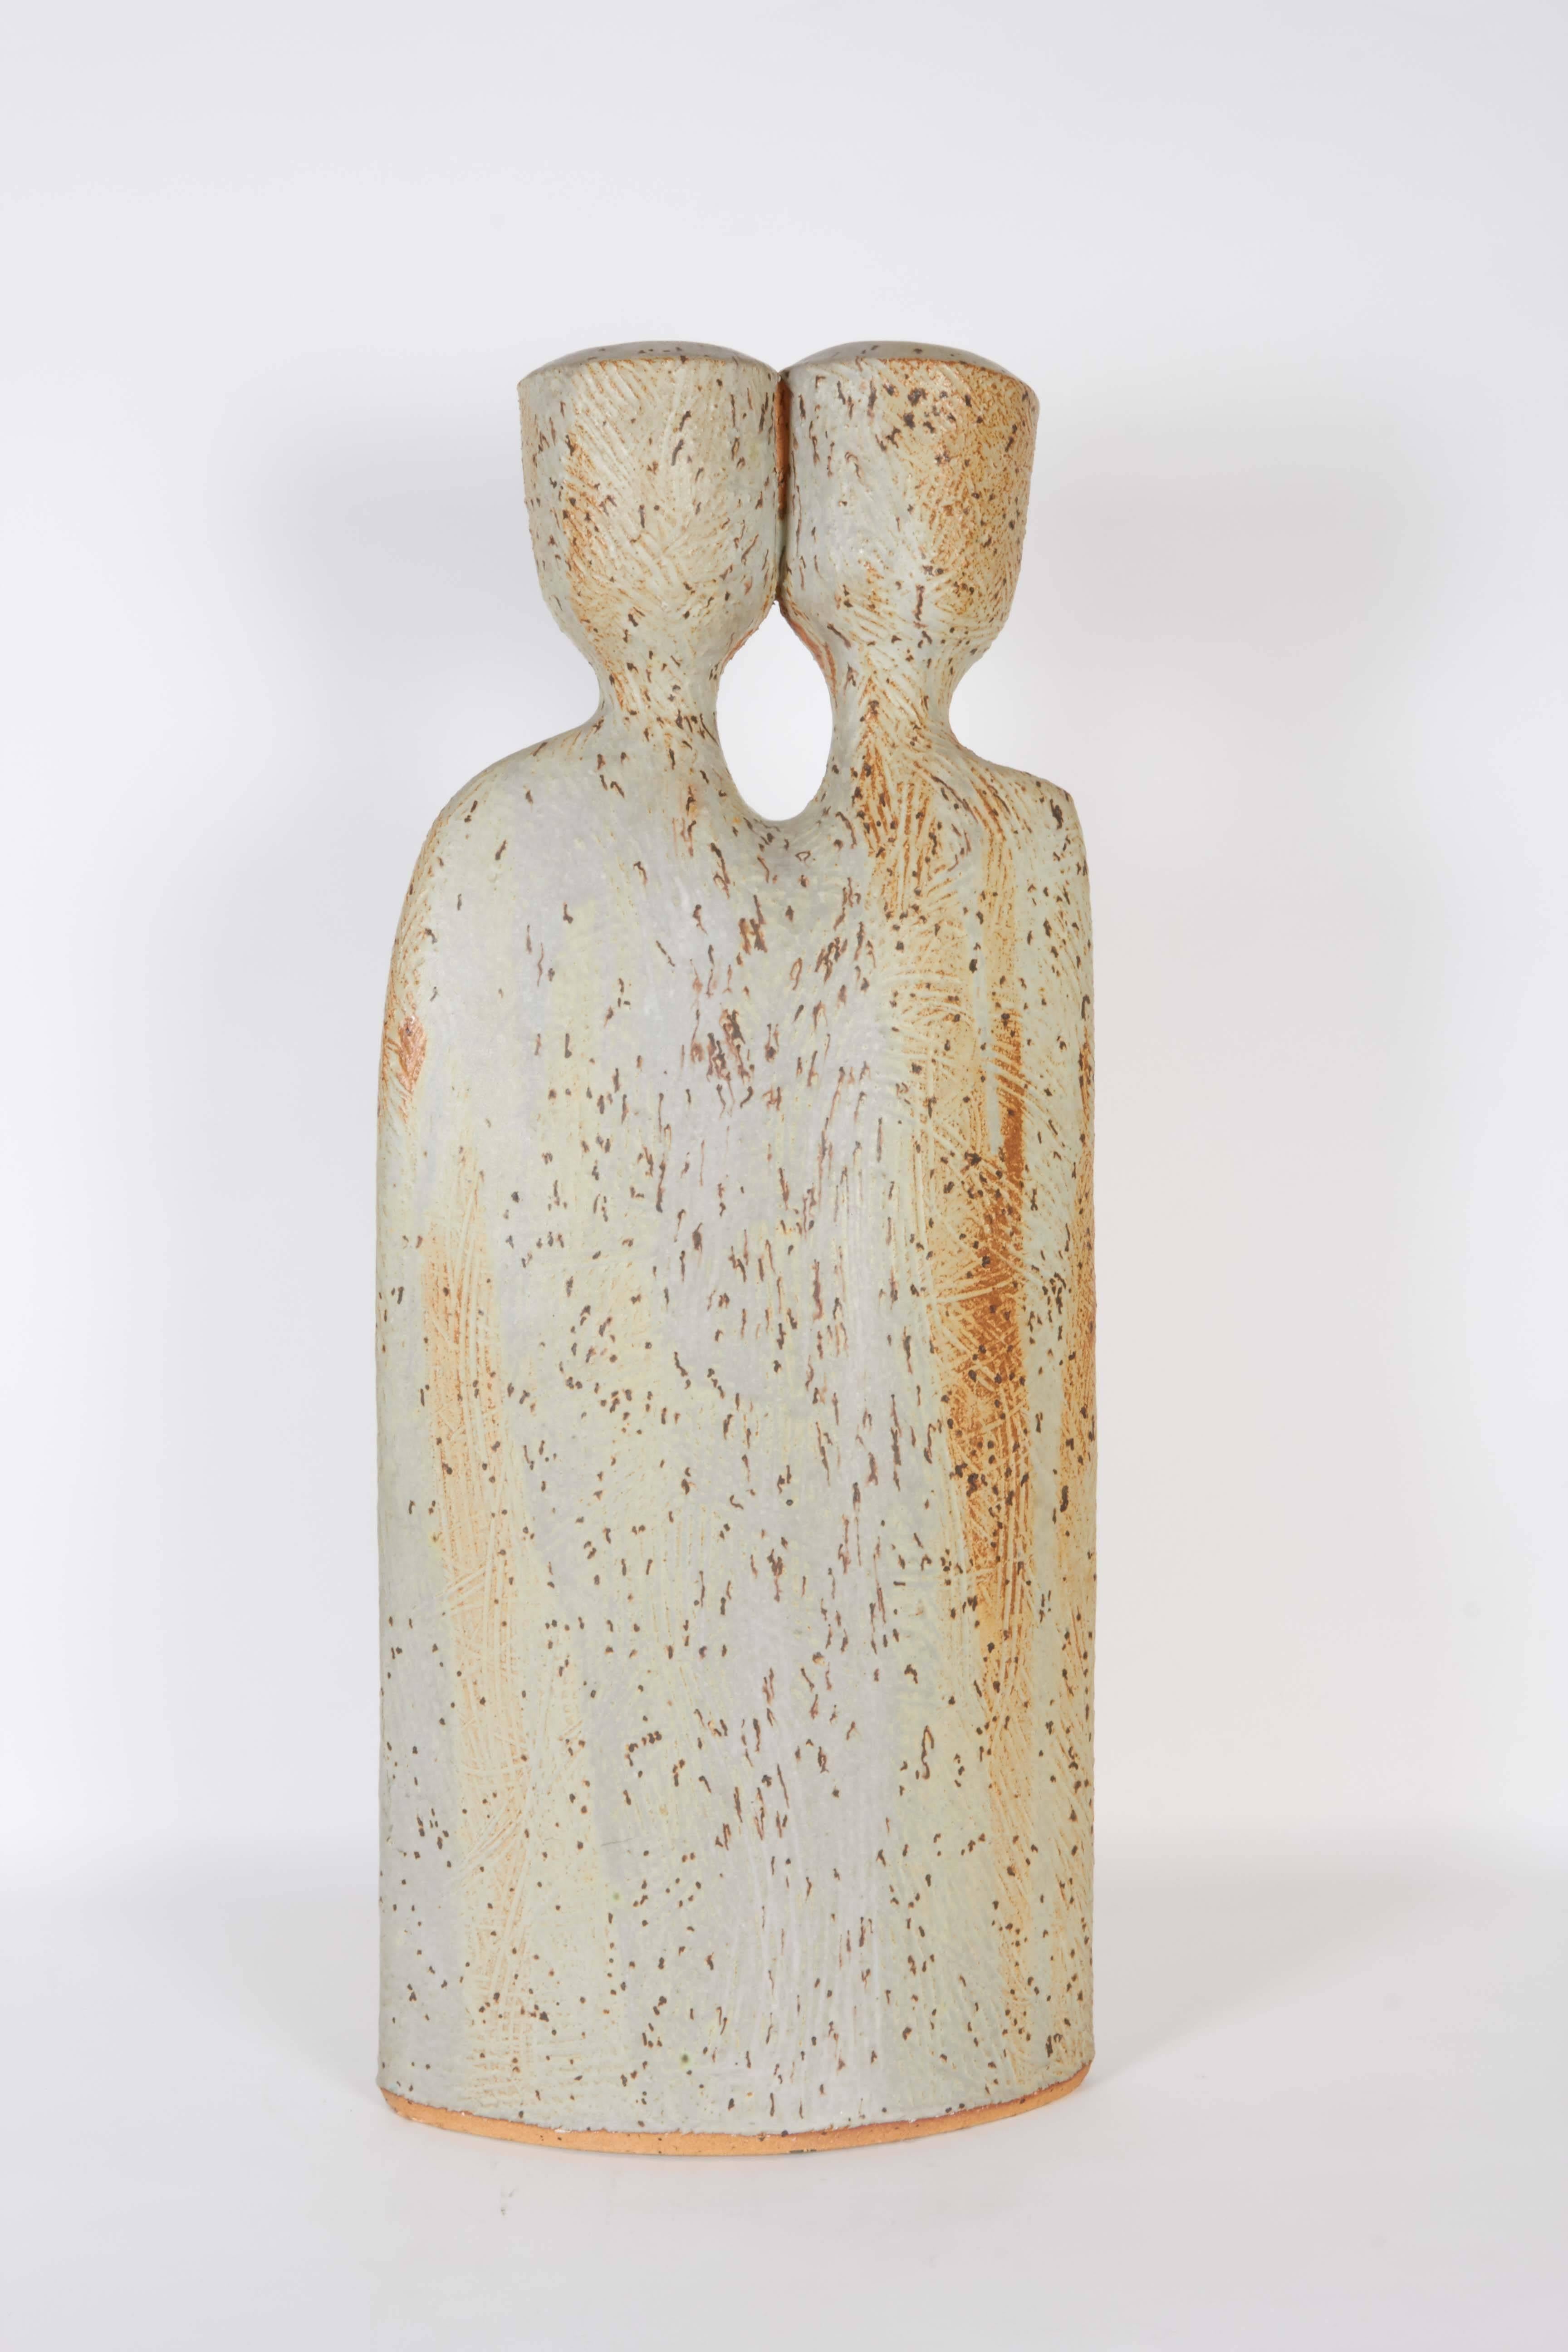 Modernist Two-Headed Sculptural Pottery Vase 1